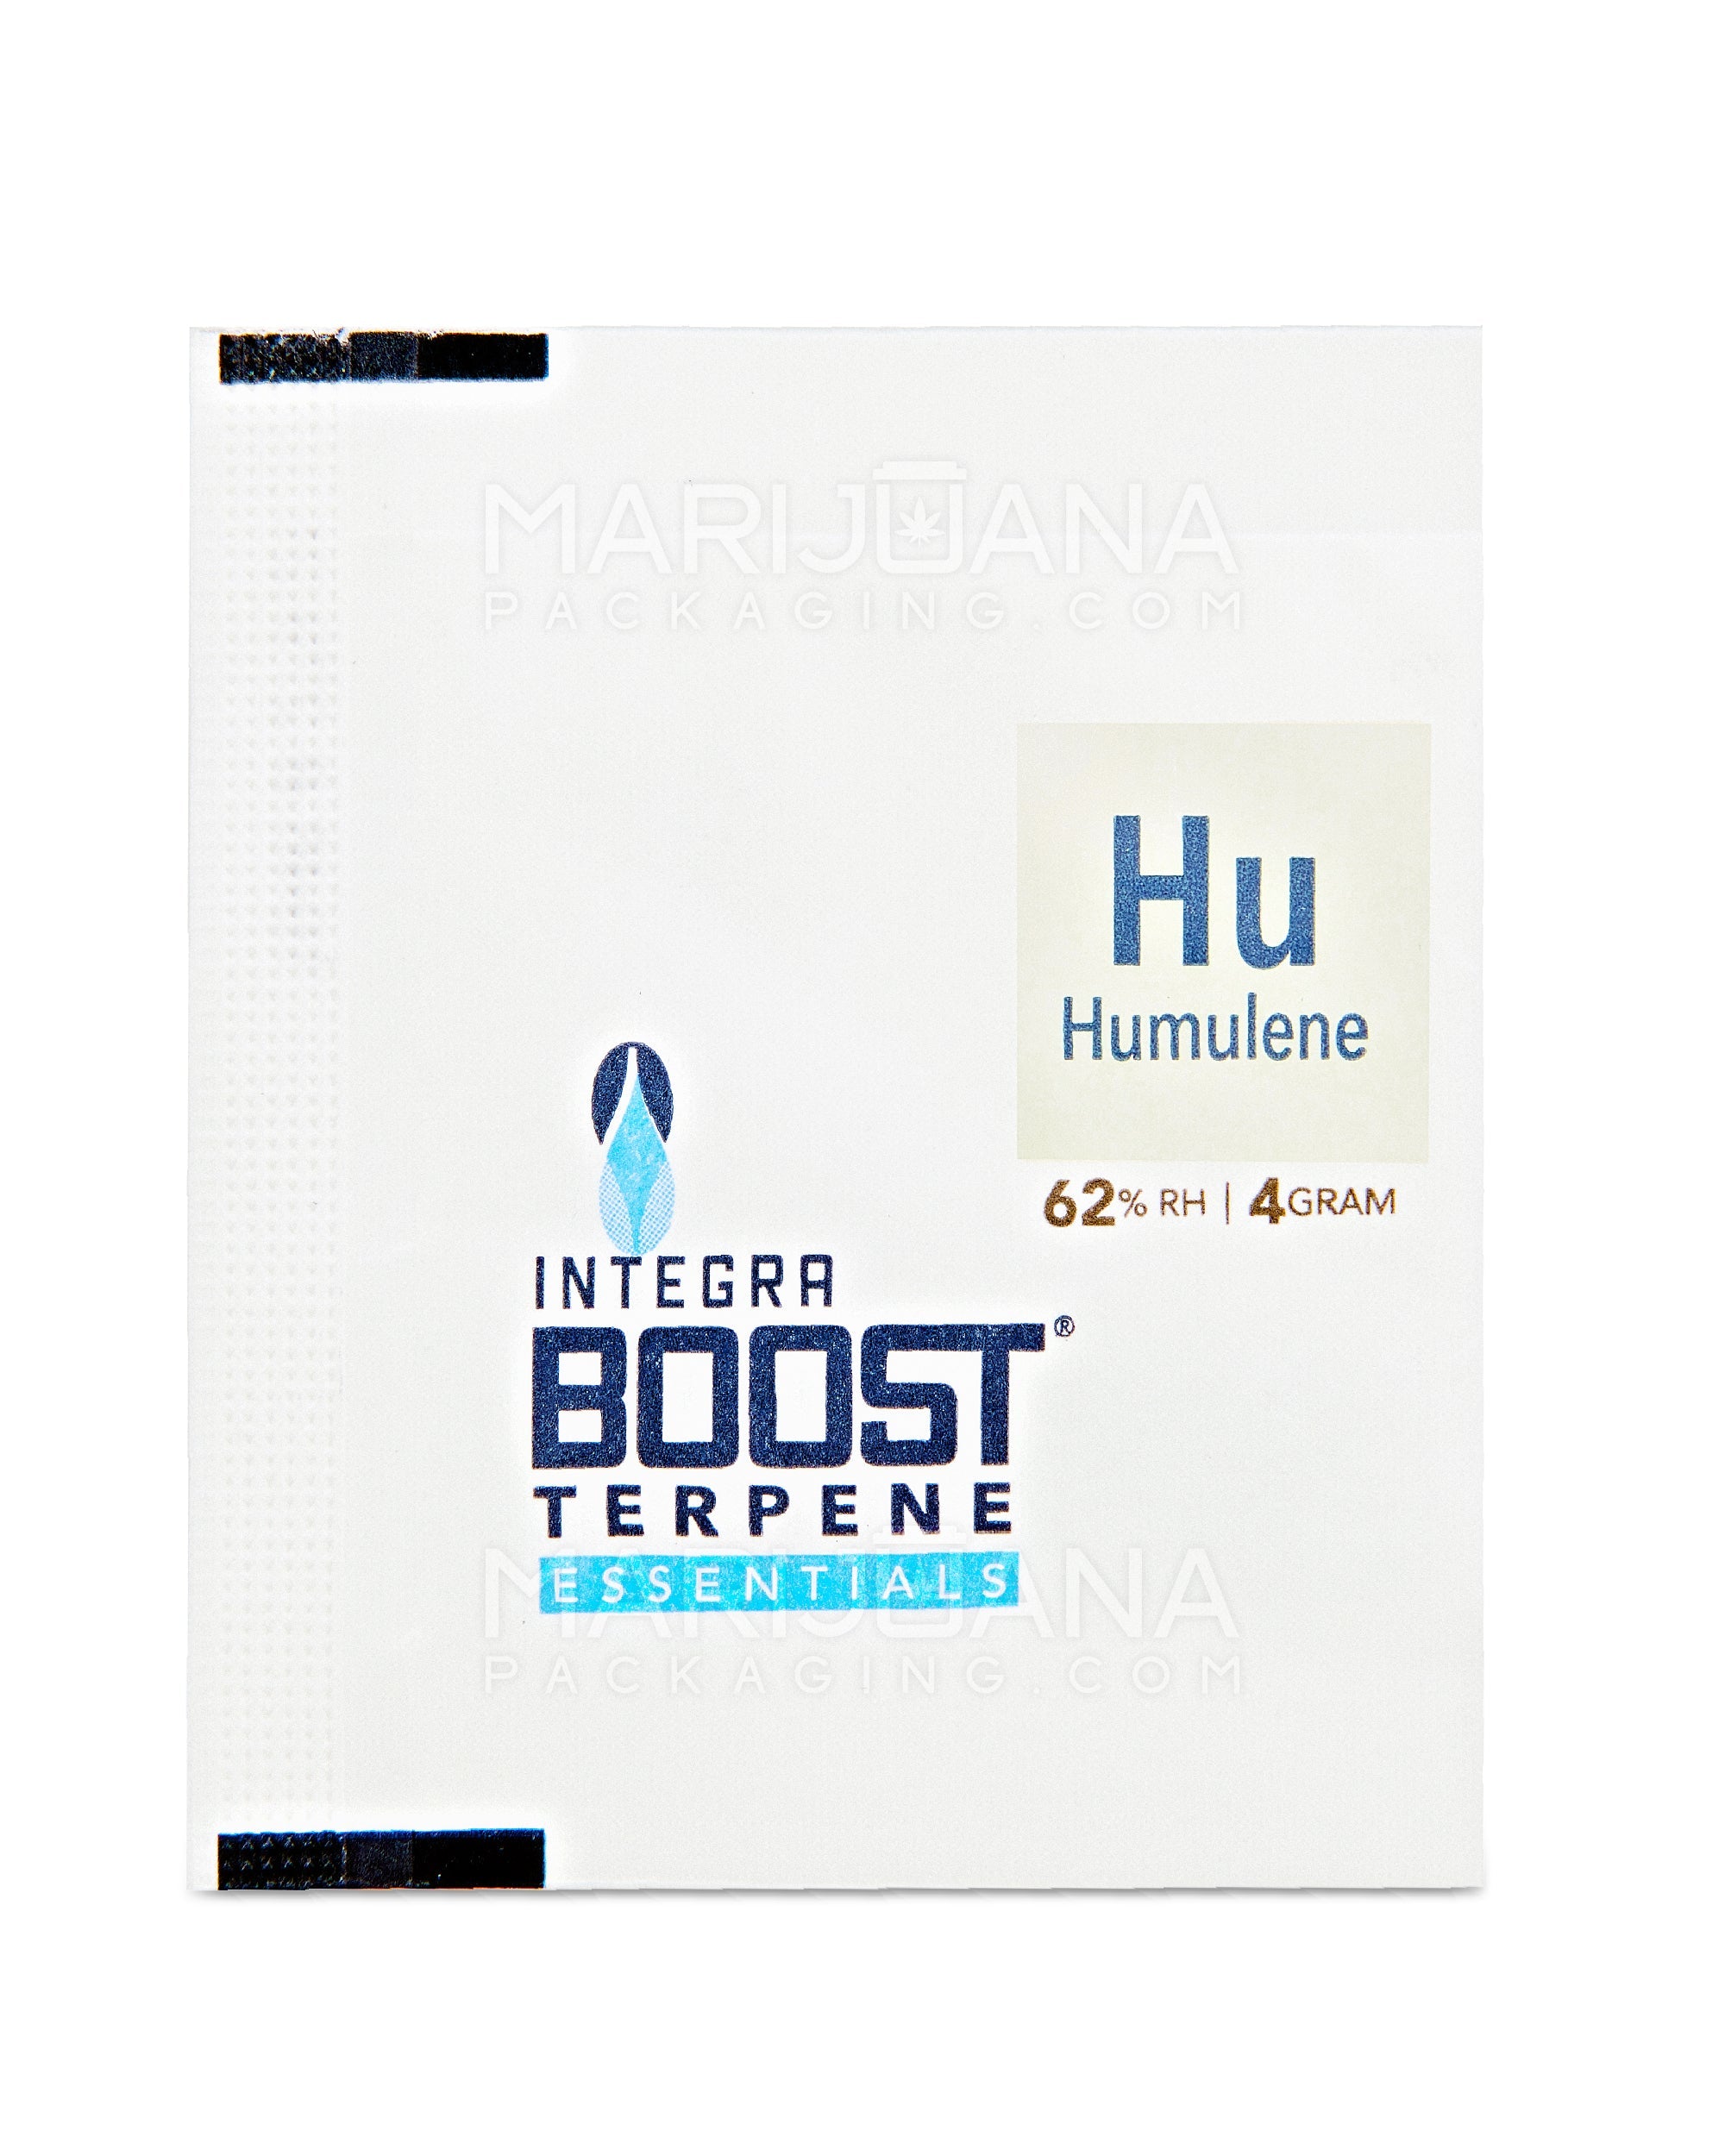 INTEGRA Boost Terpene Essentials Humulene Humidity Pack | 4 Grams - 62% | Sample - 3